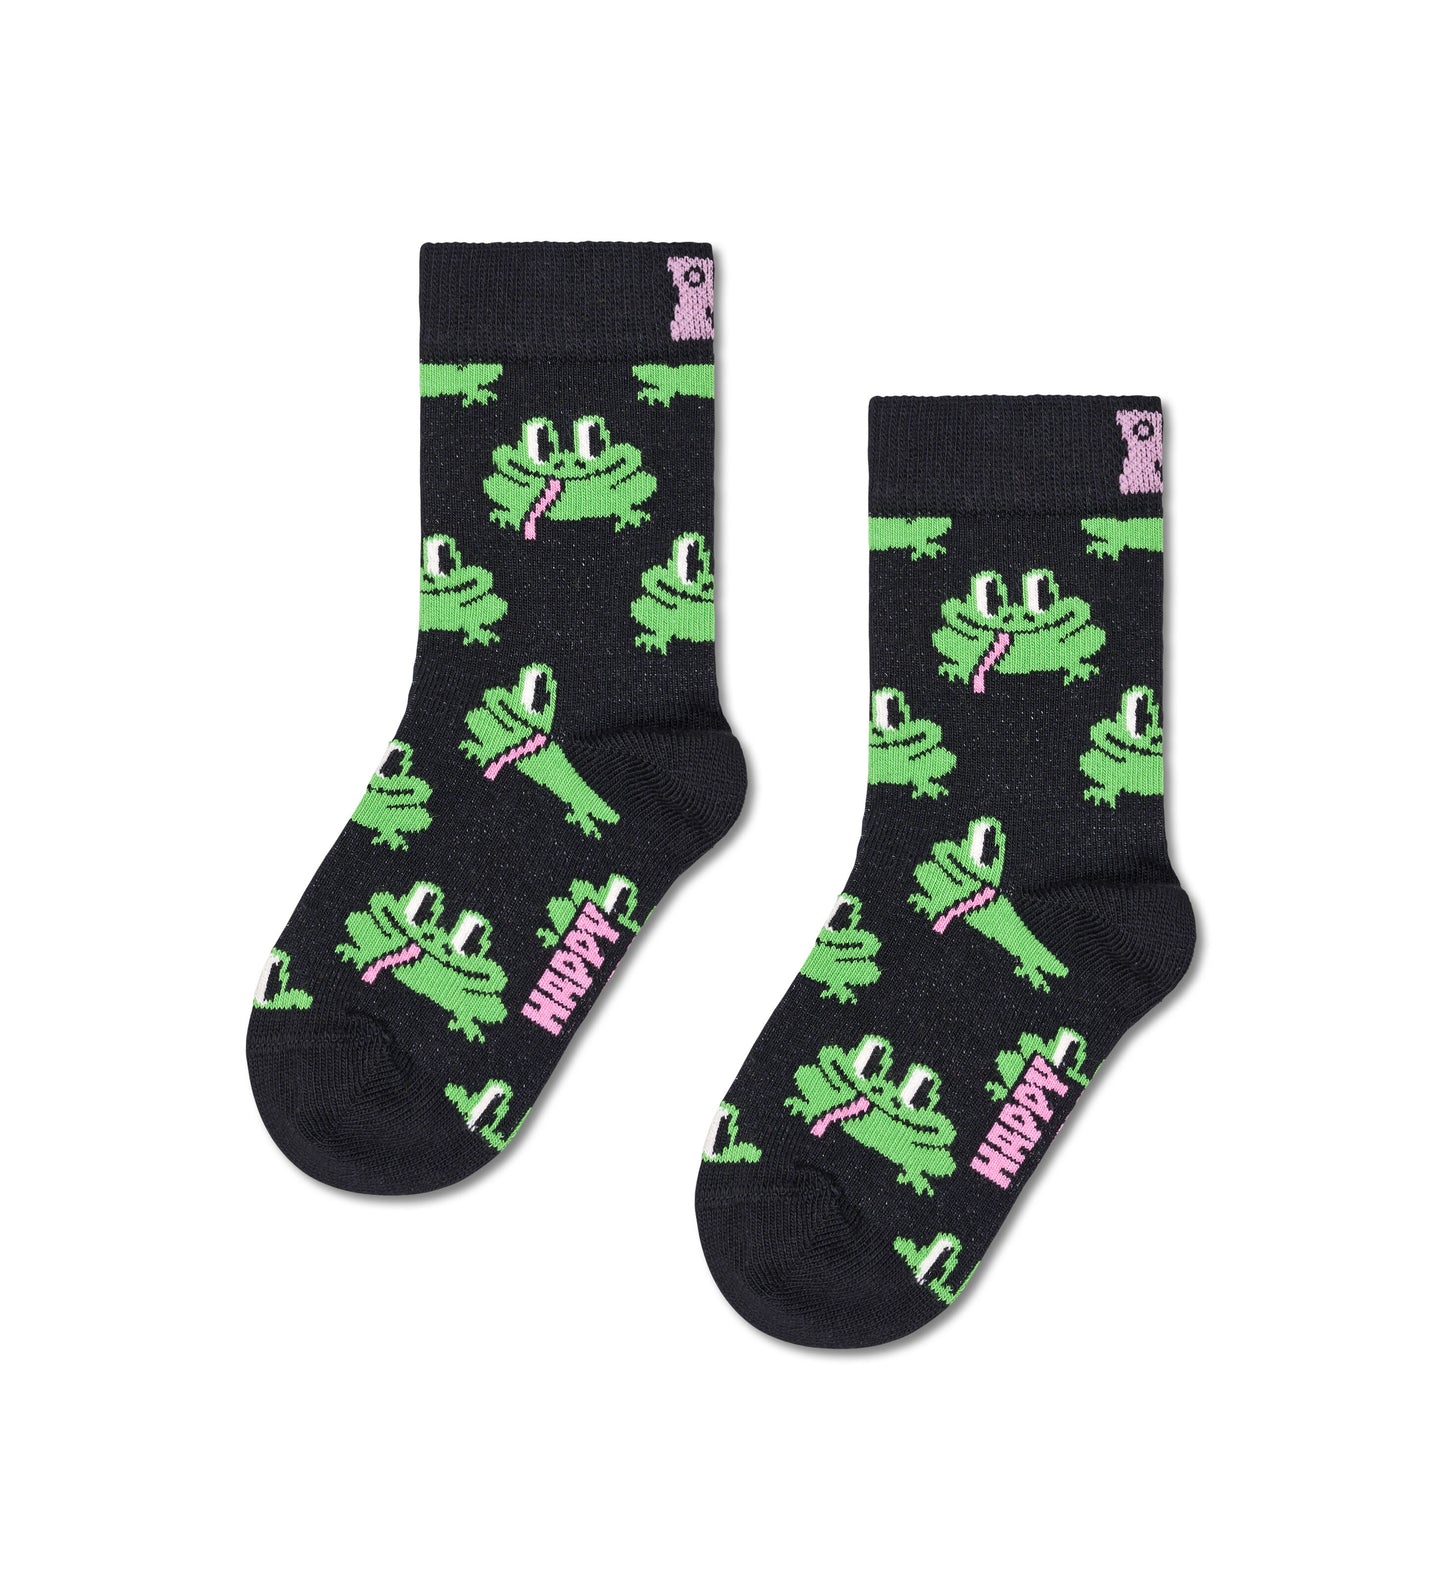 Kids Frog Socks by Happy SocksKids Frog Socks by Happy Socks